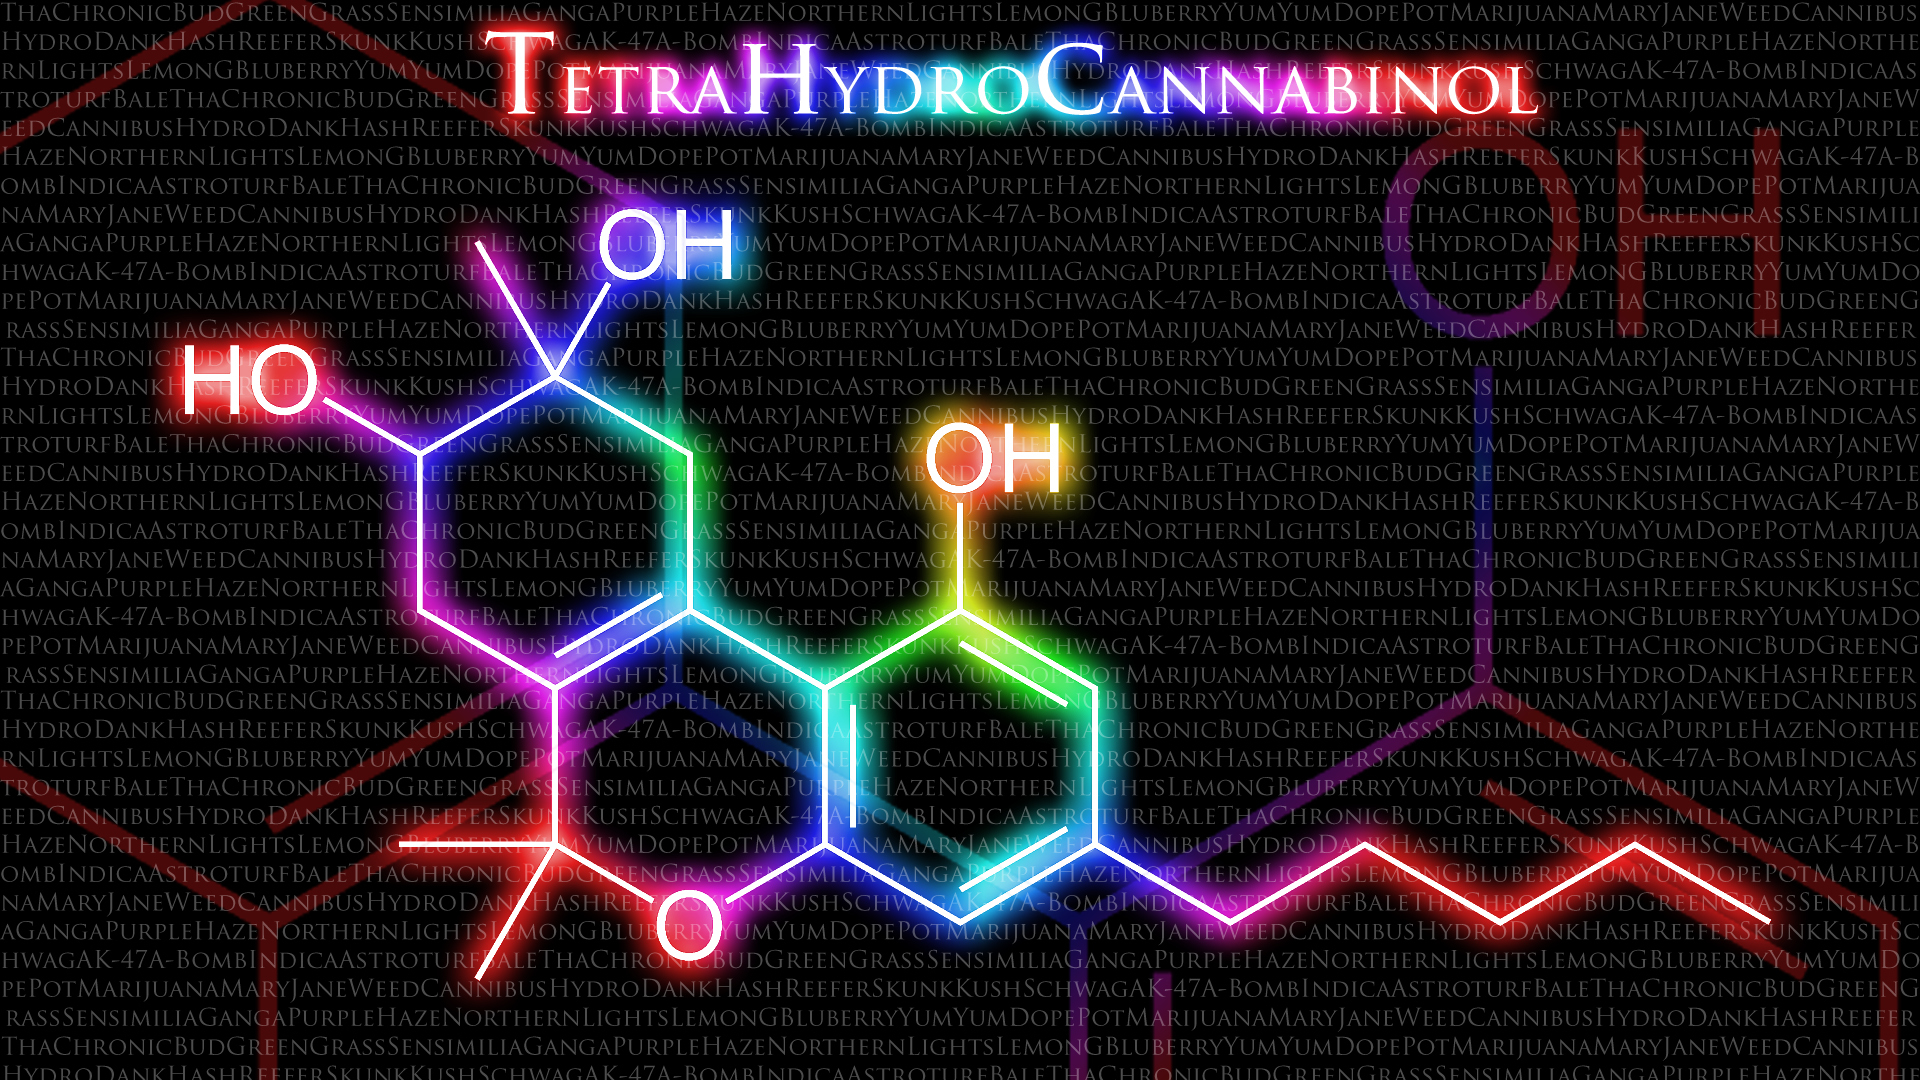 Desktop Wallpaper on Marijuana Chemistry Thc Category General This Free Desktop Wallpaper